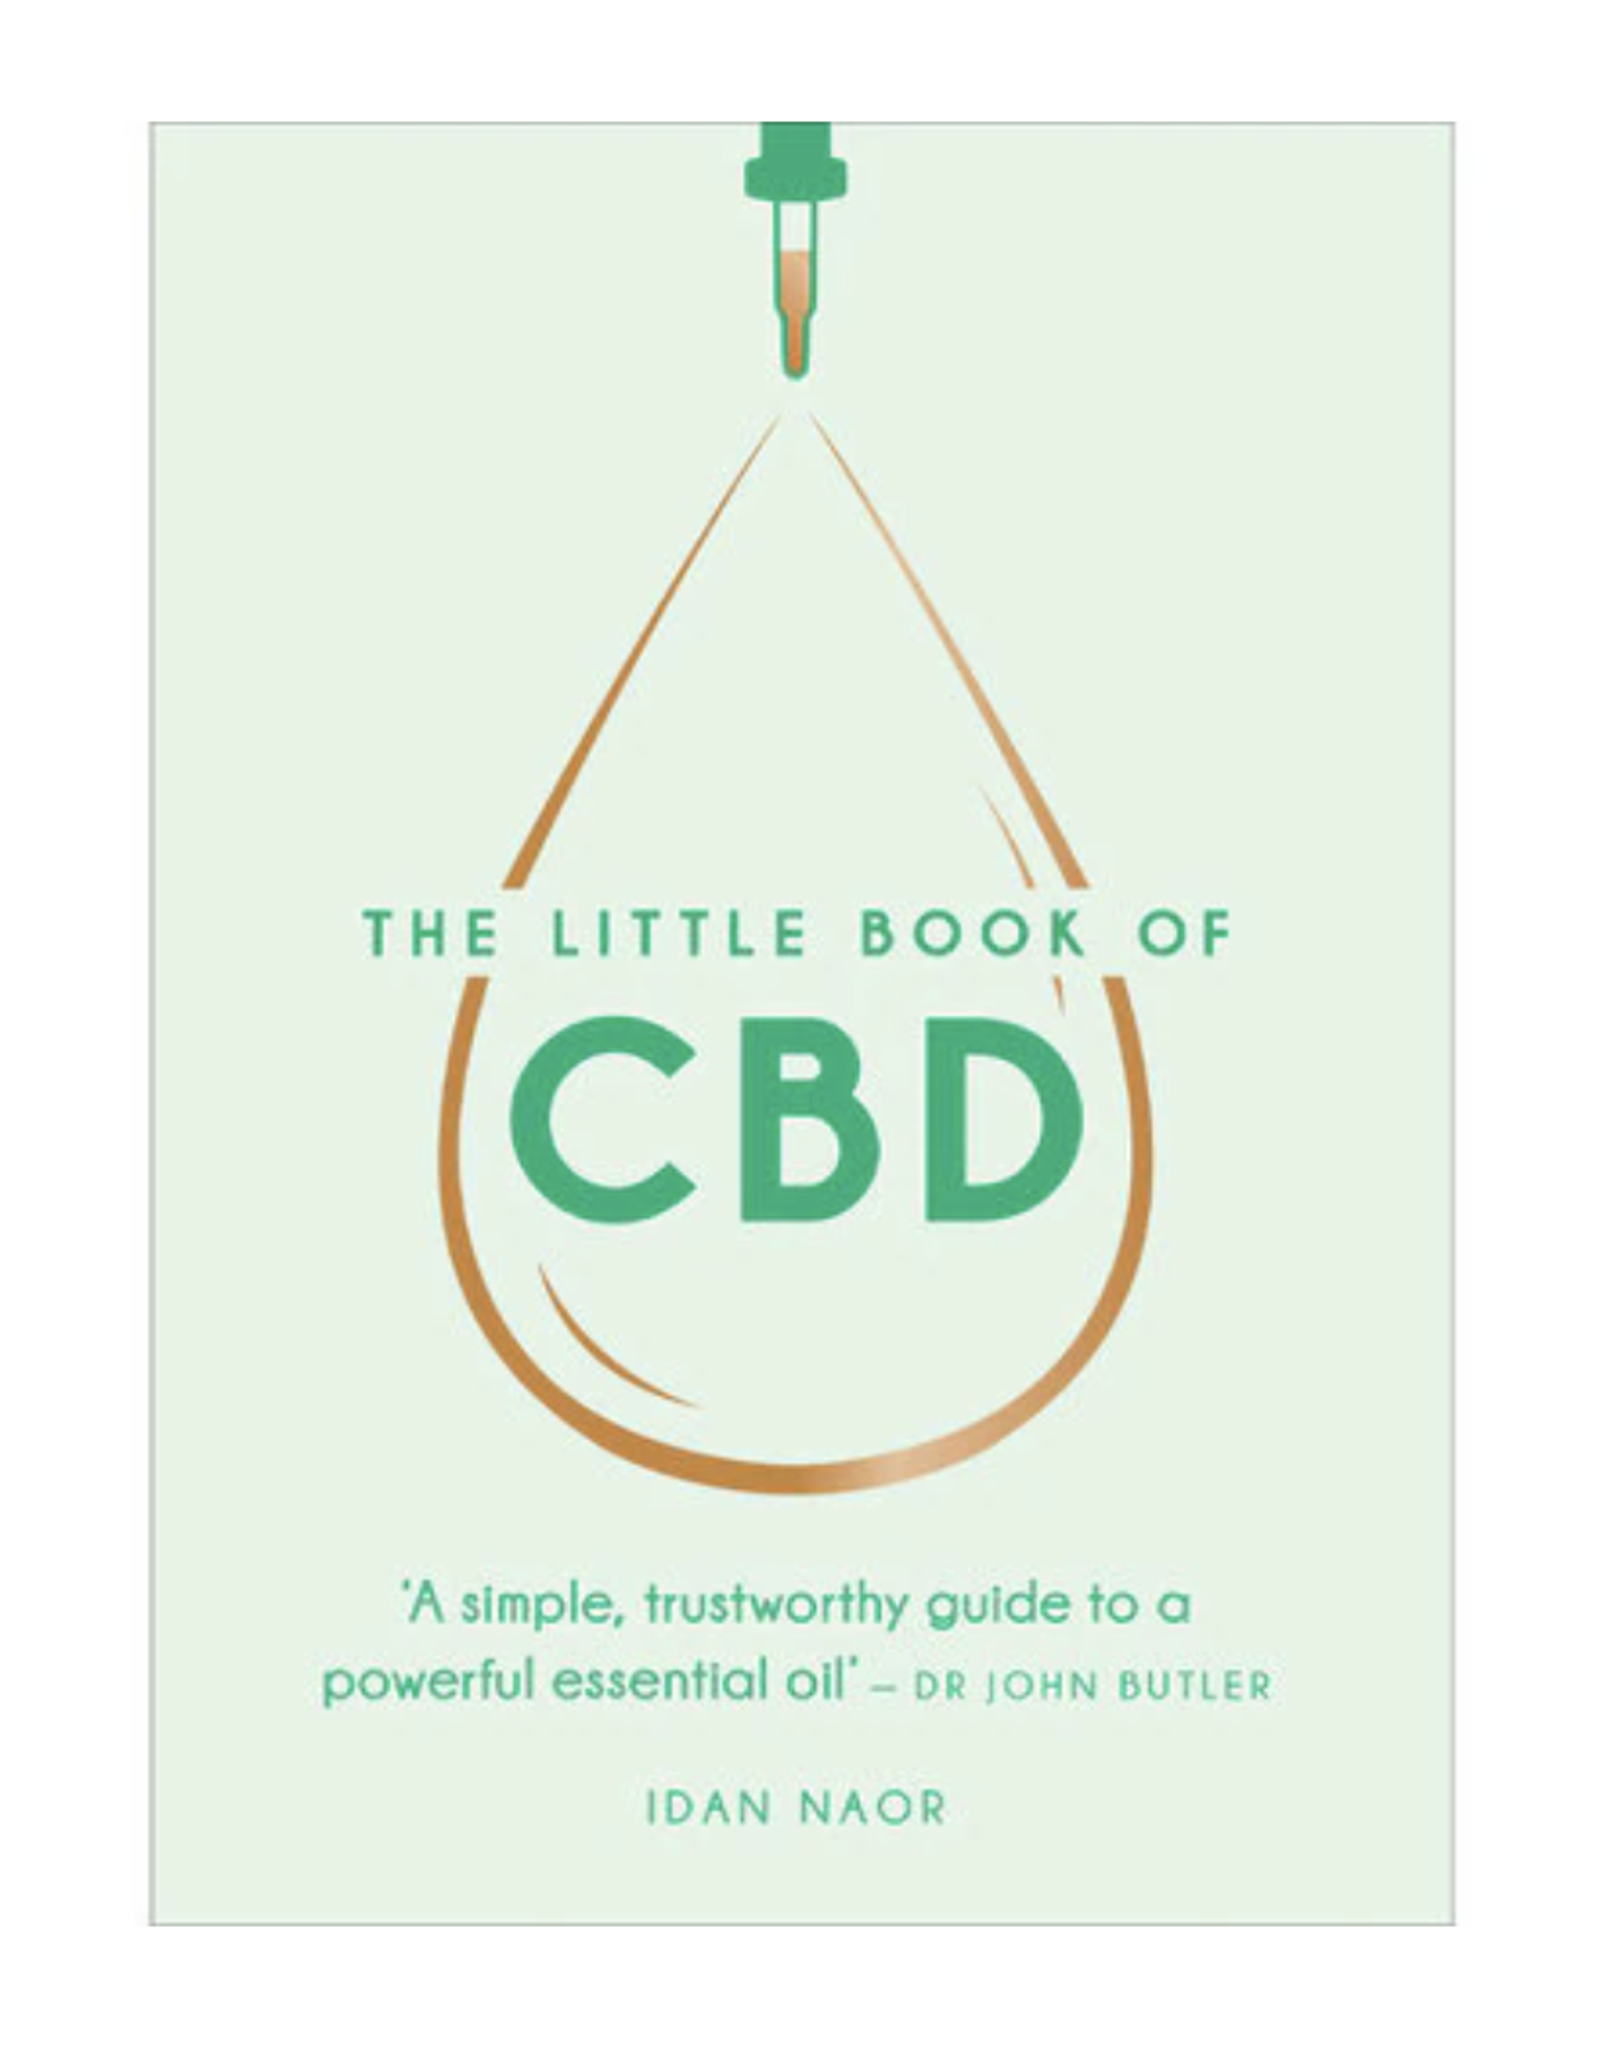 The Little Book of CBD by Idan Naor